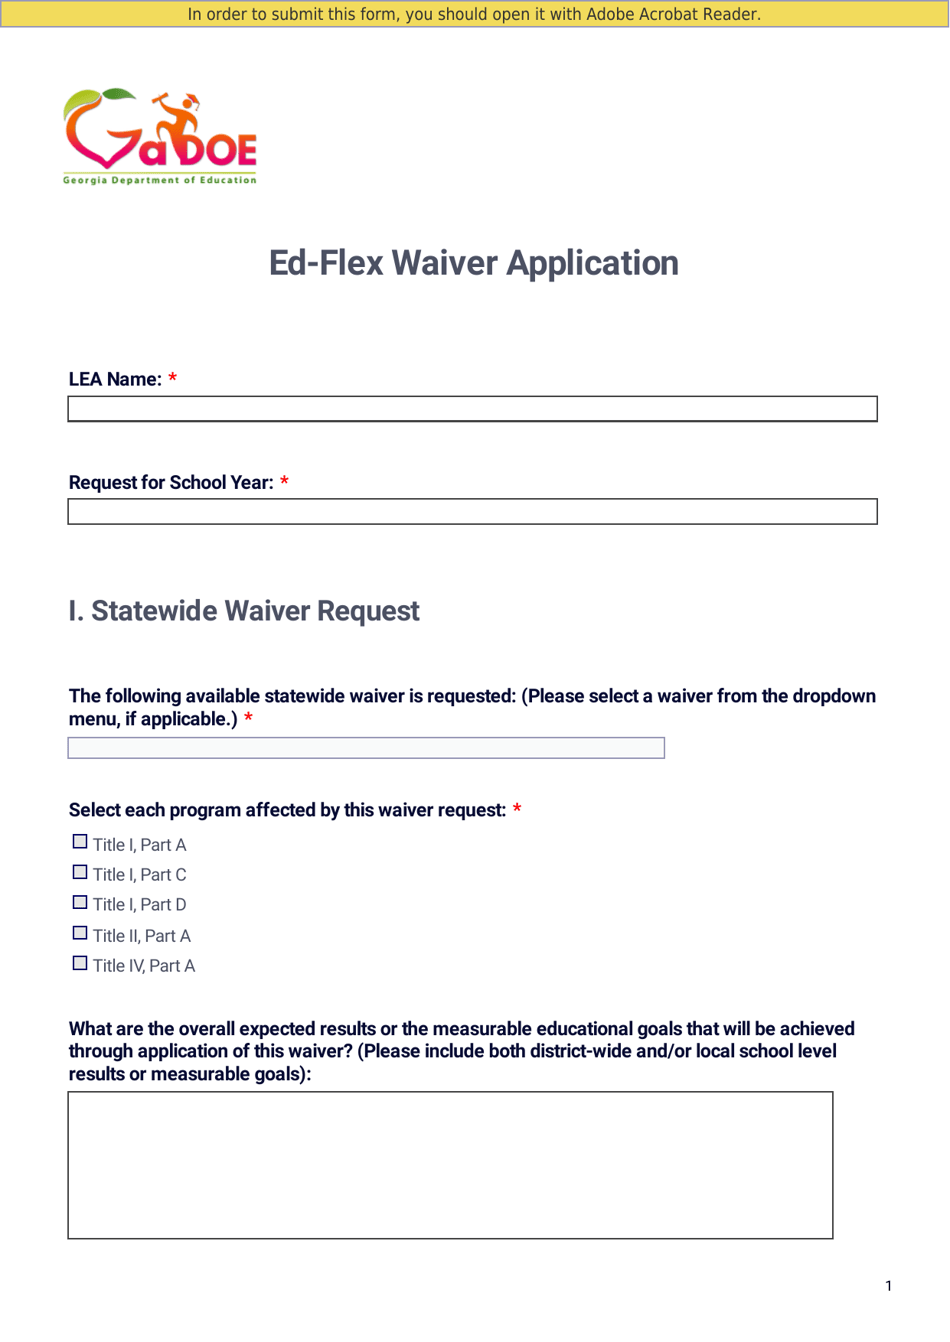 Ed-Flex Waiver Application - Georgia (United States), Page 1